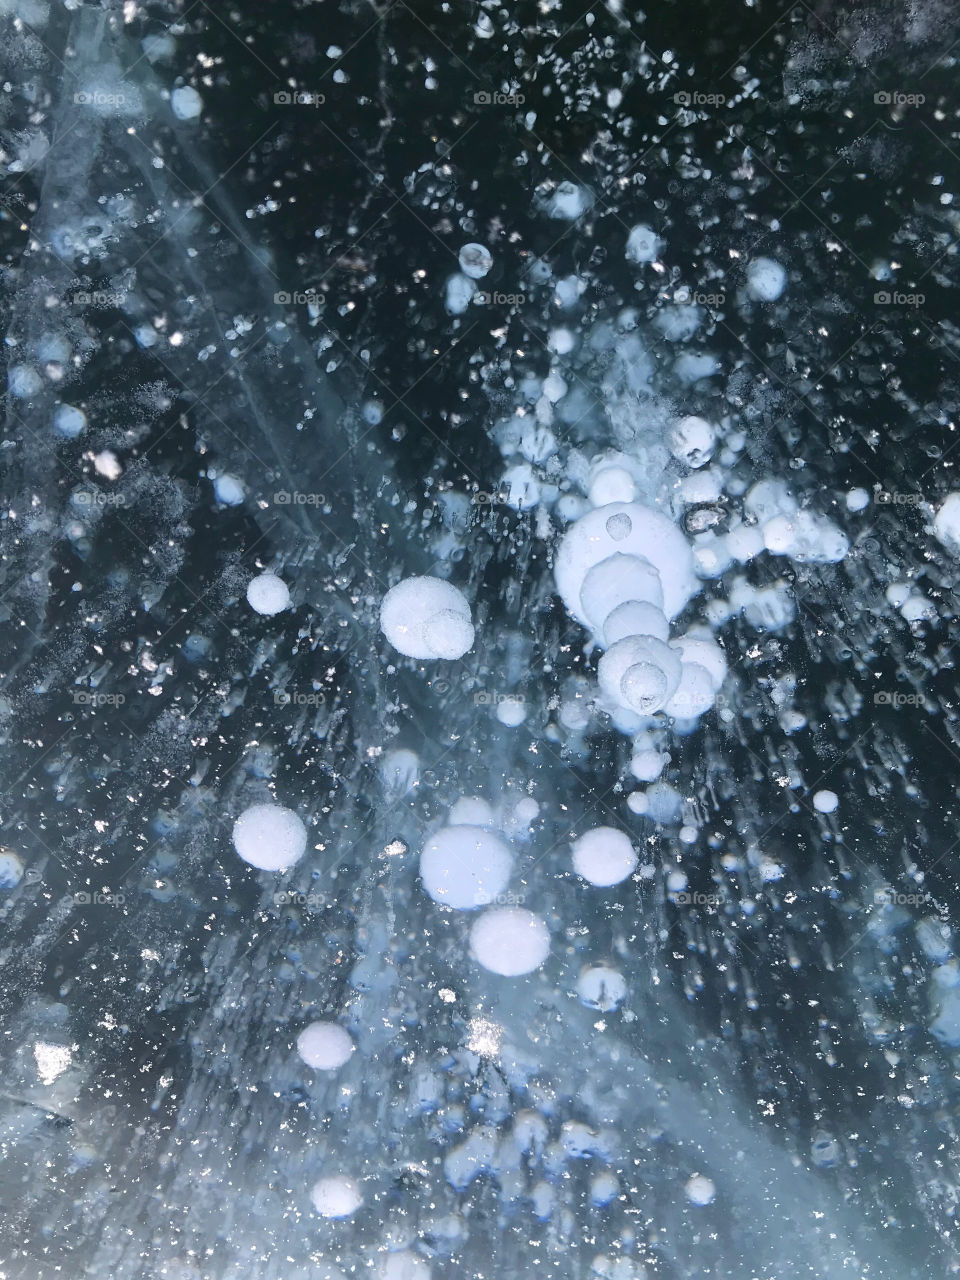 Bubble beneath ice lake surface in Russia